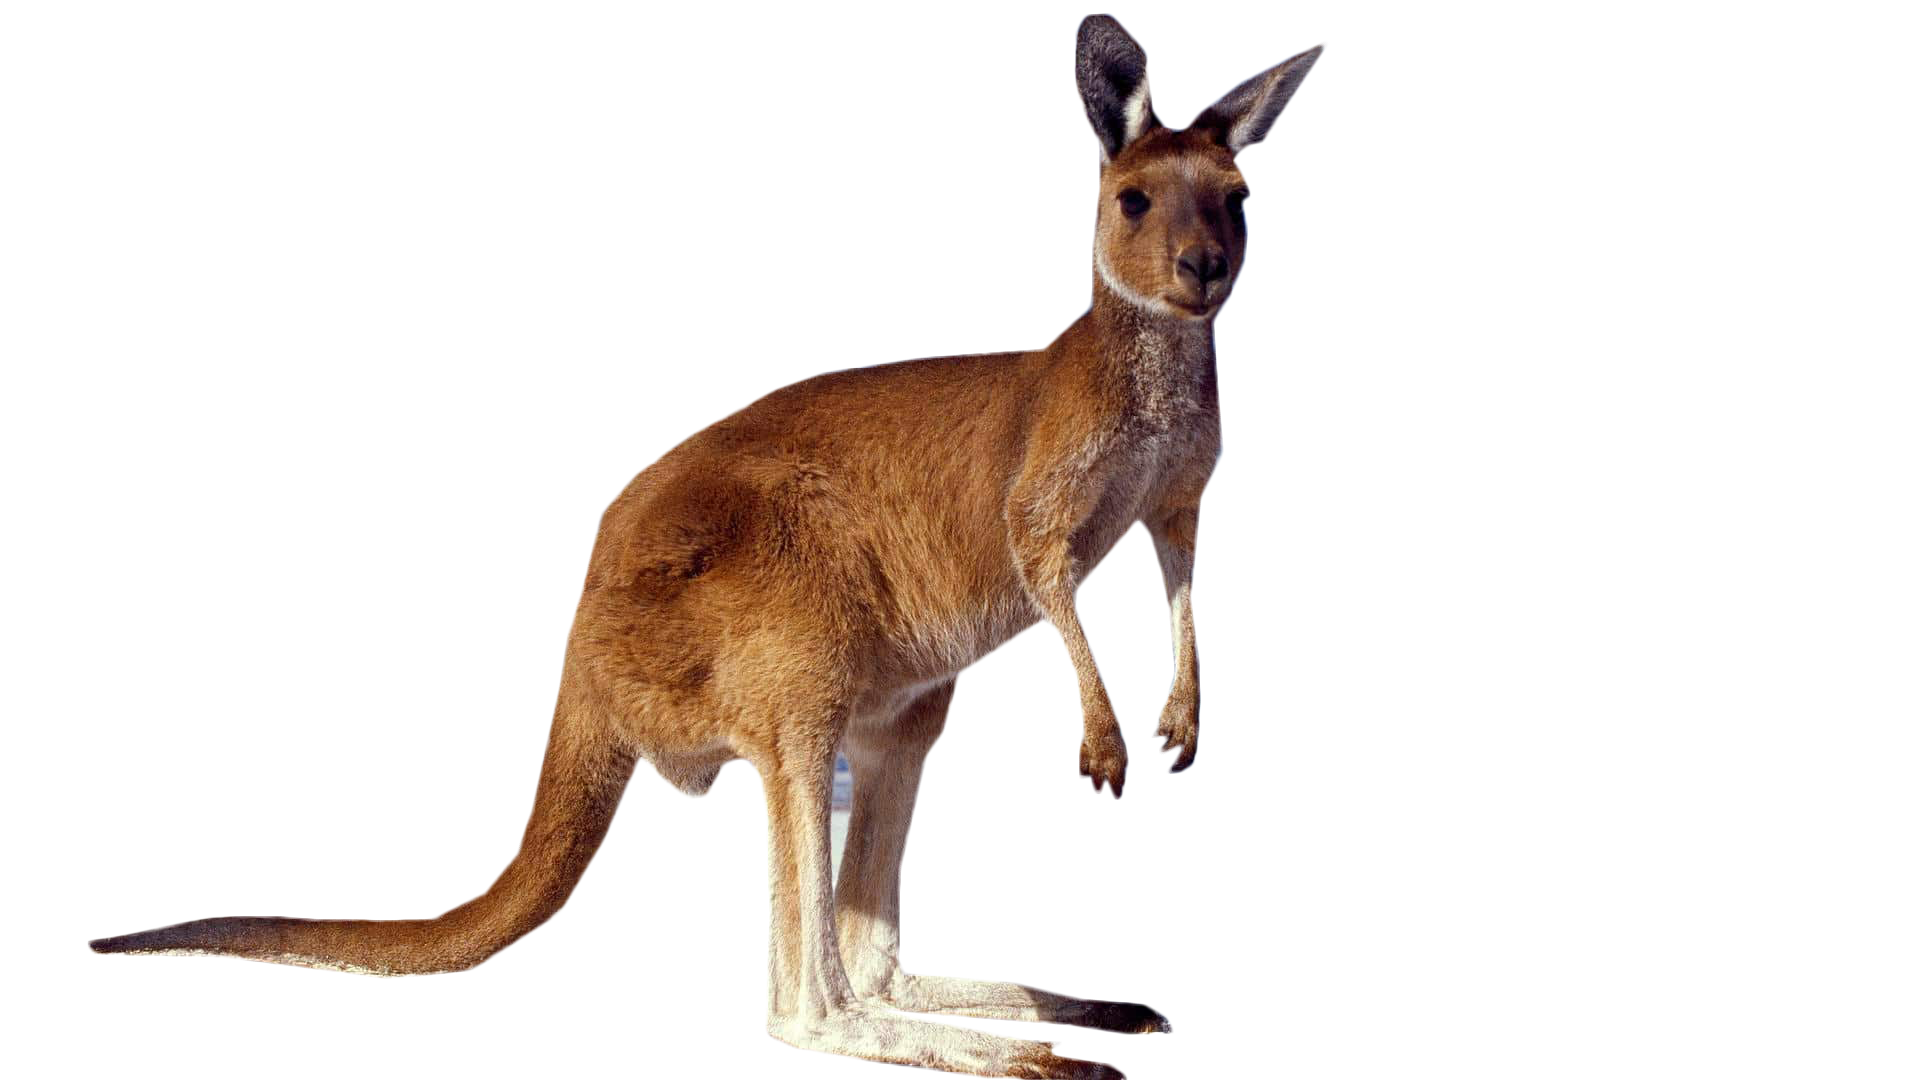 Kangaroo Standing PNG Image - PurePNG | Free transparent CC0 PNG Image ...